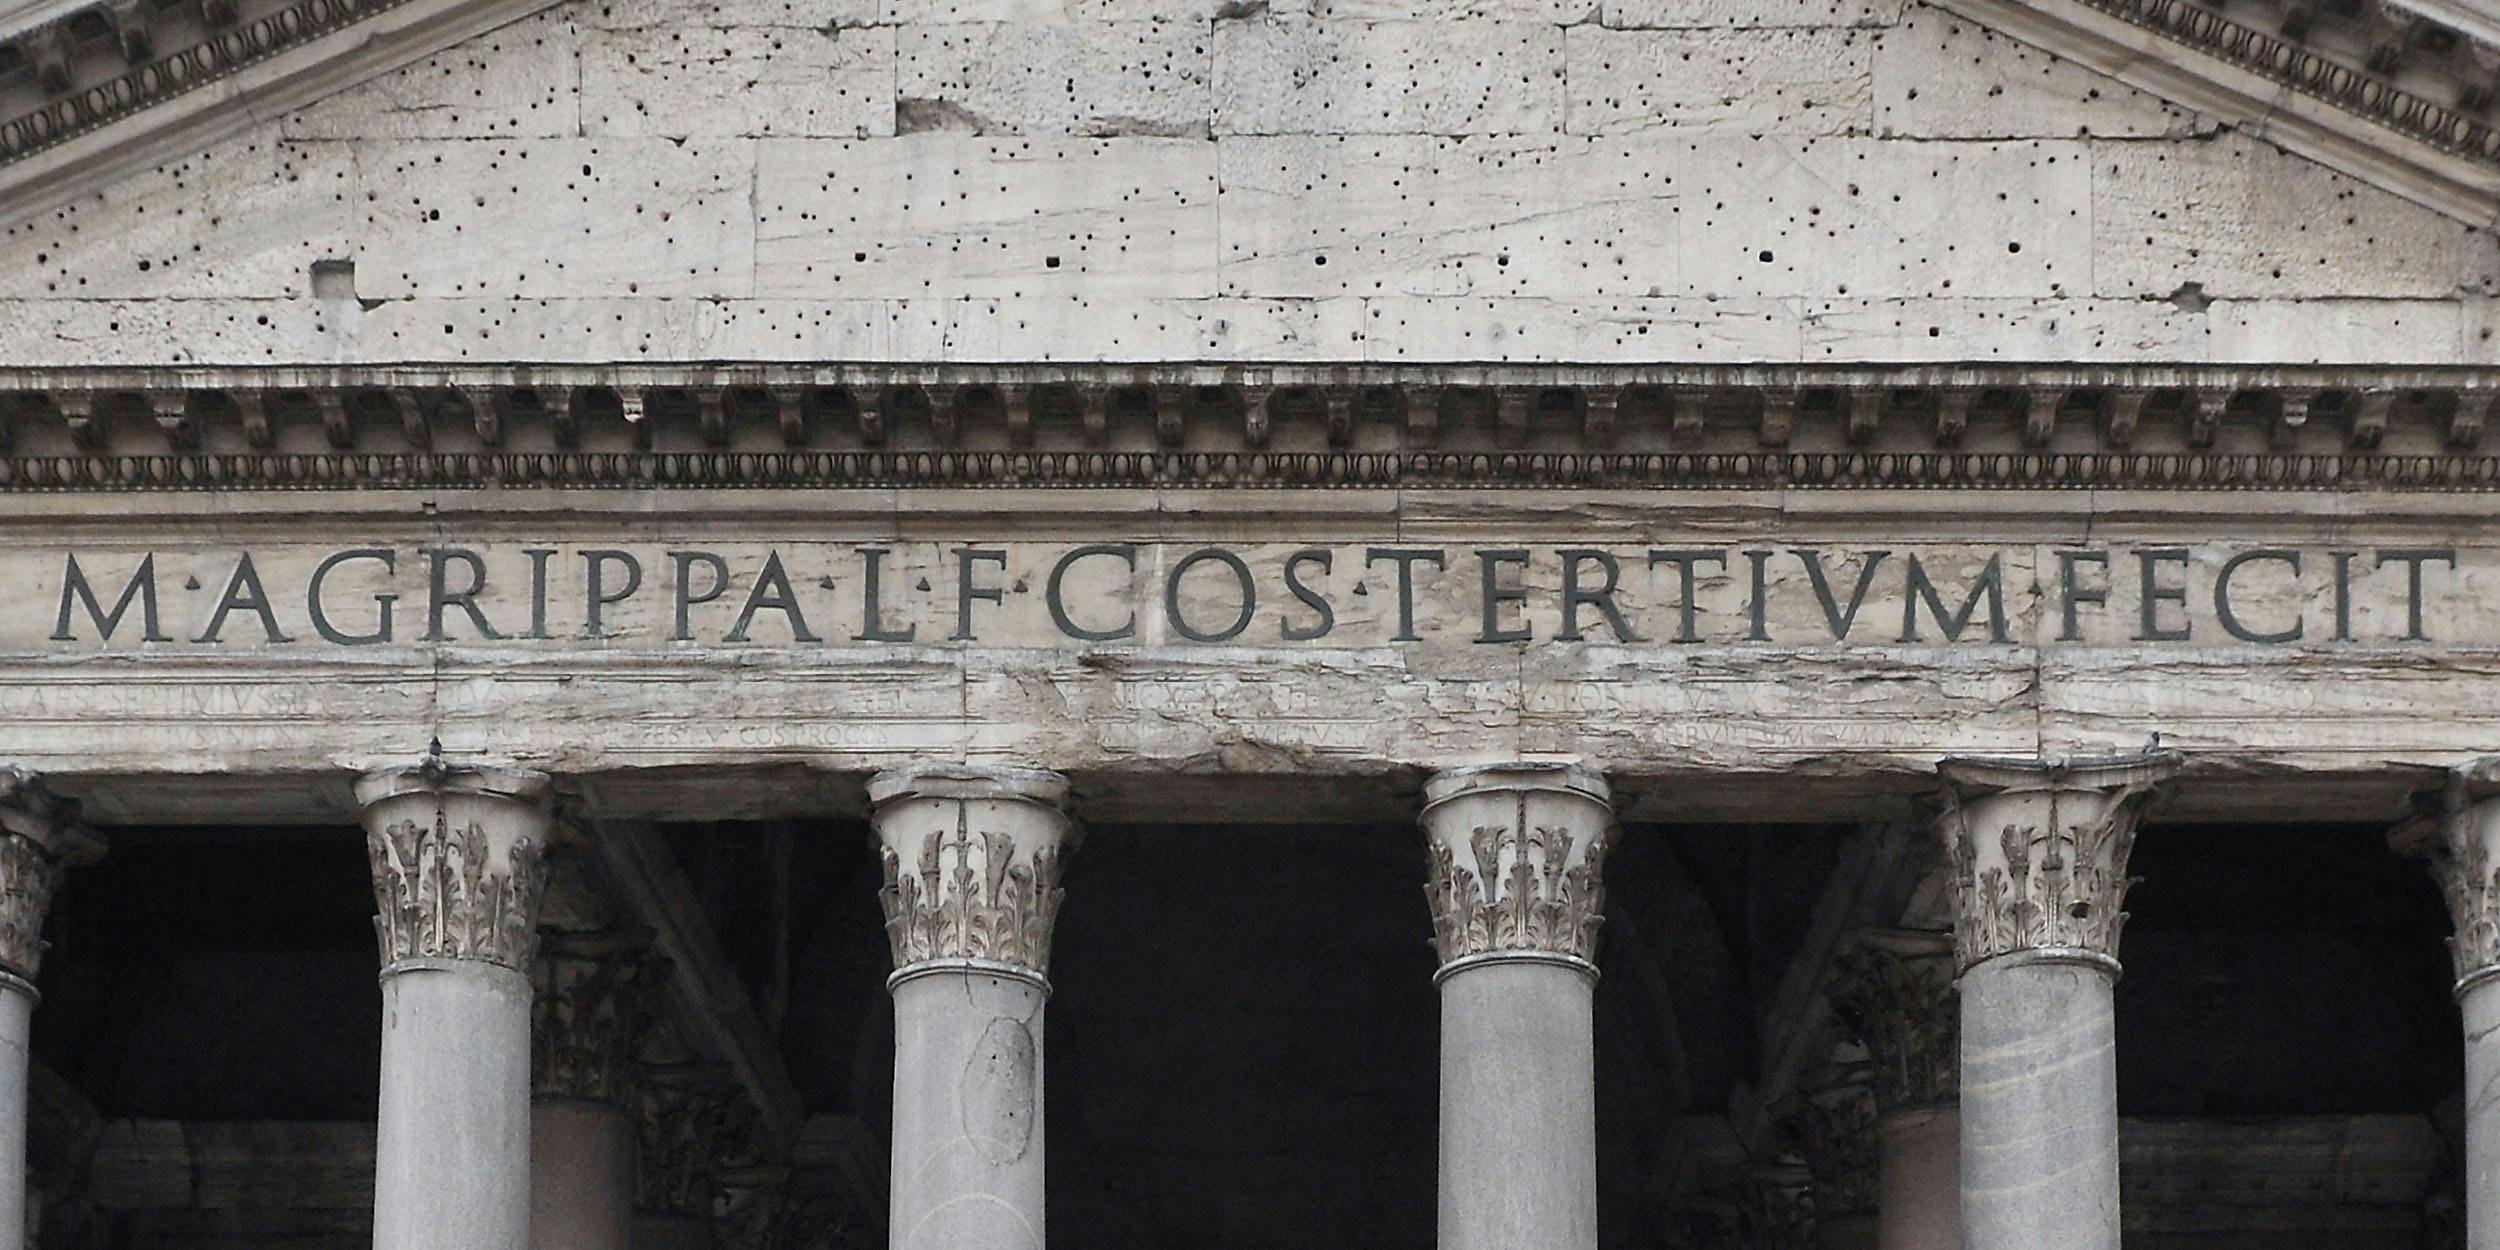 Roman inscriptions on Pantheon in Rome